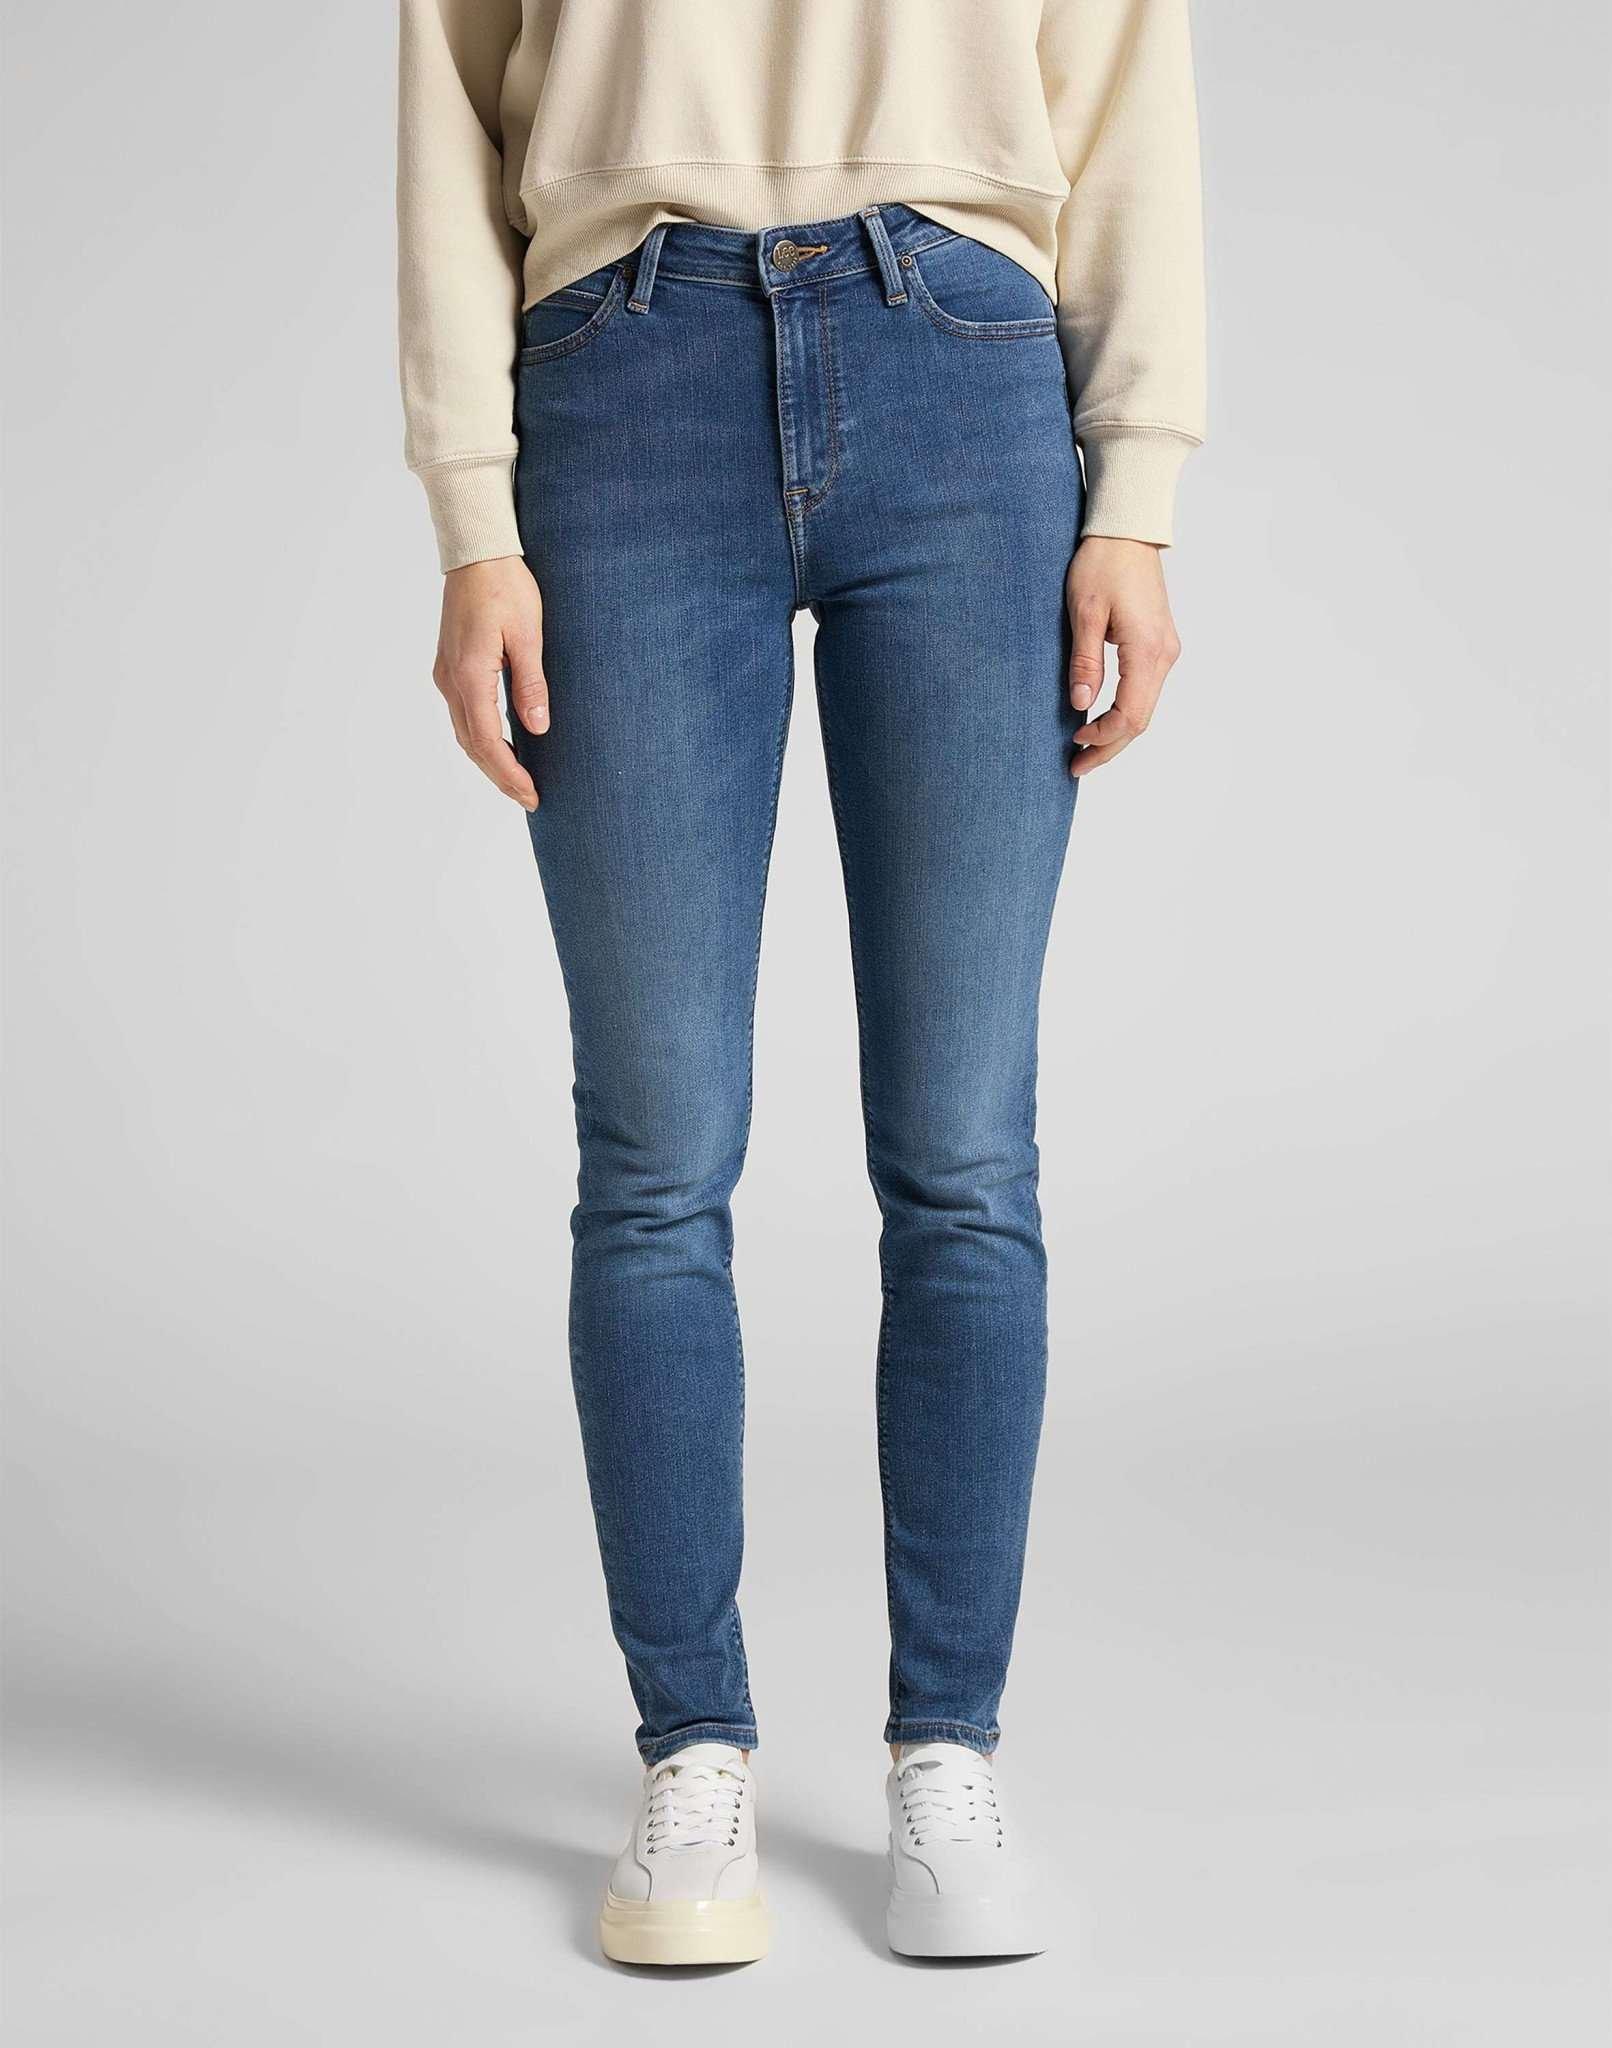 Jeans Skinny Fit Scarlett High Damen Blau Denim L33/W29 von Lee